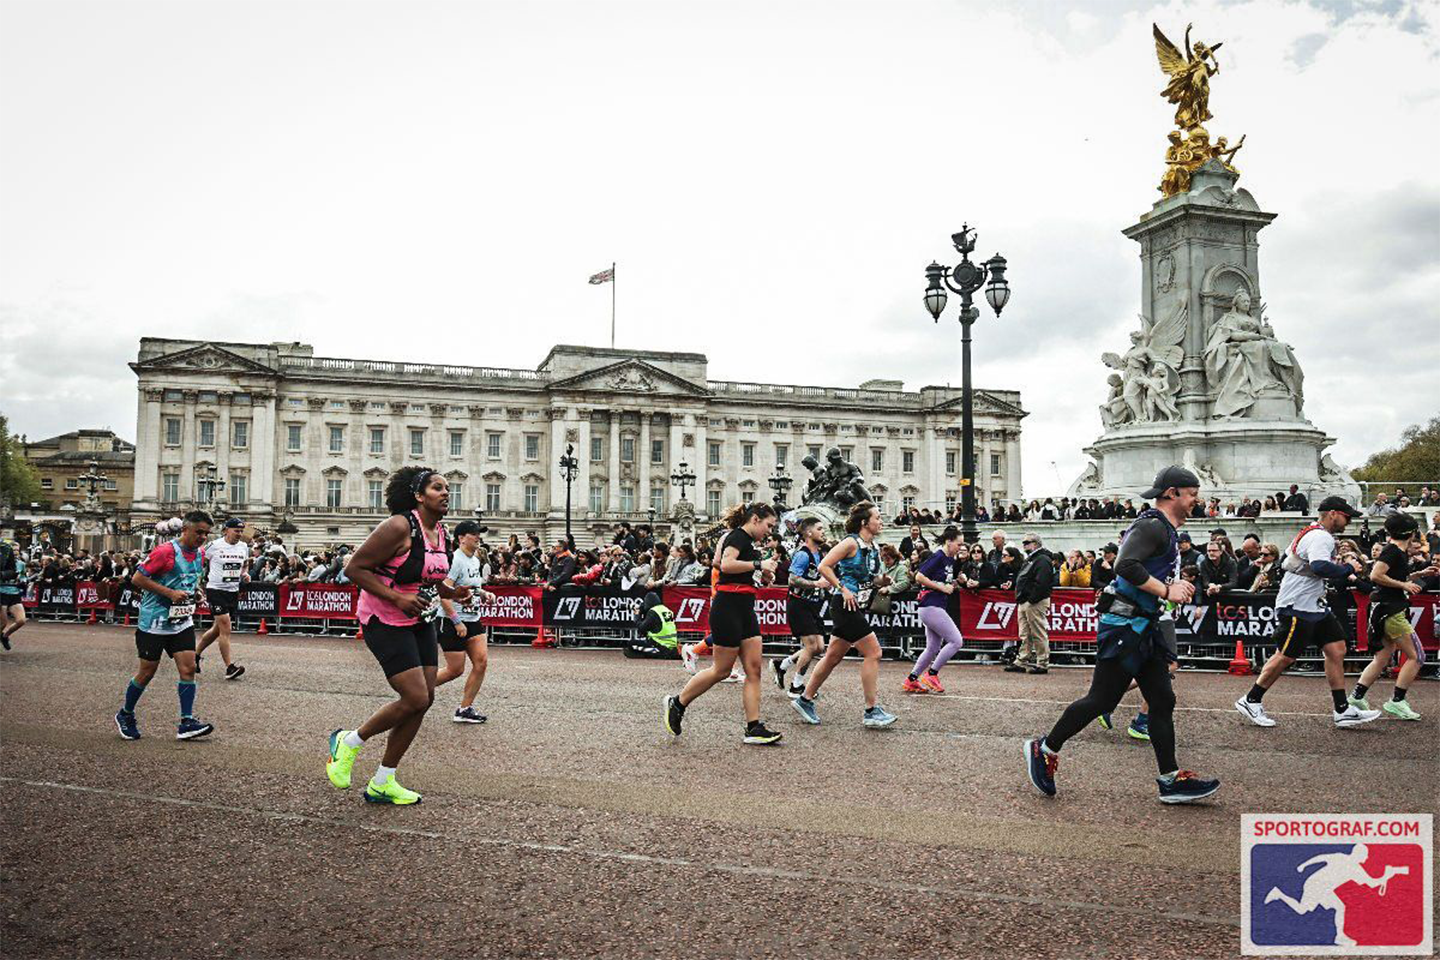 Runners in the London marathon run by Buckingham palace